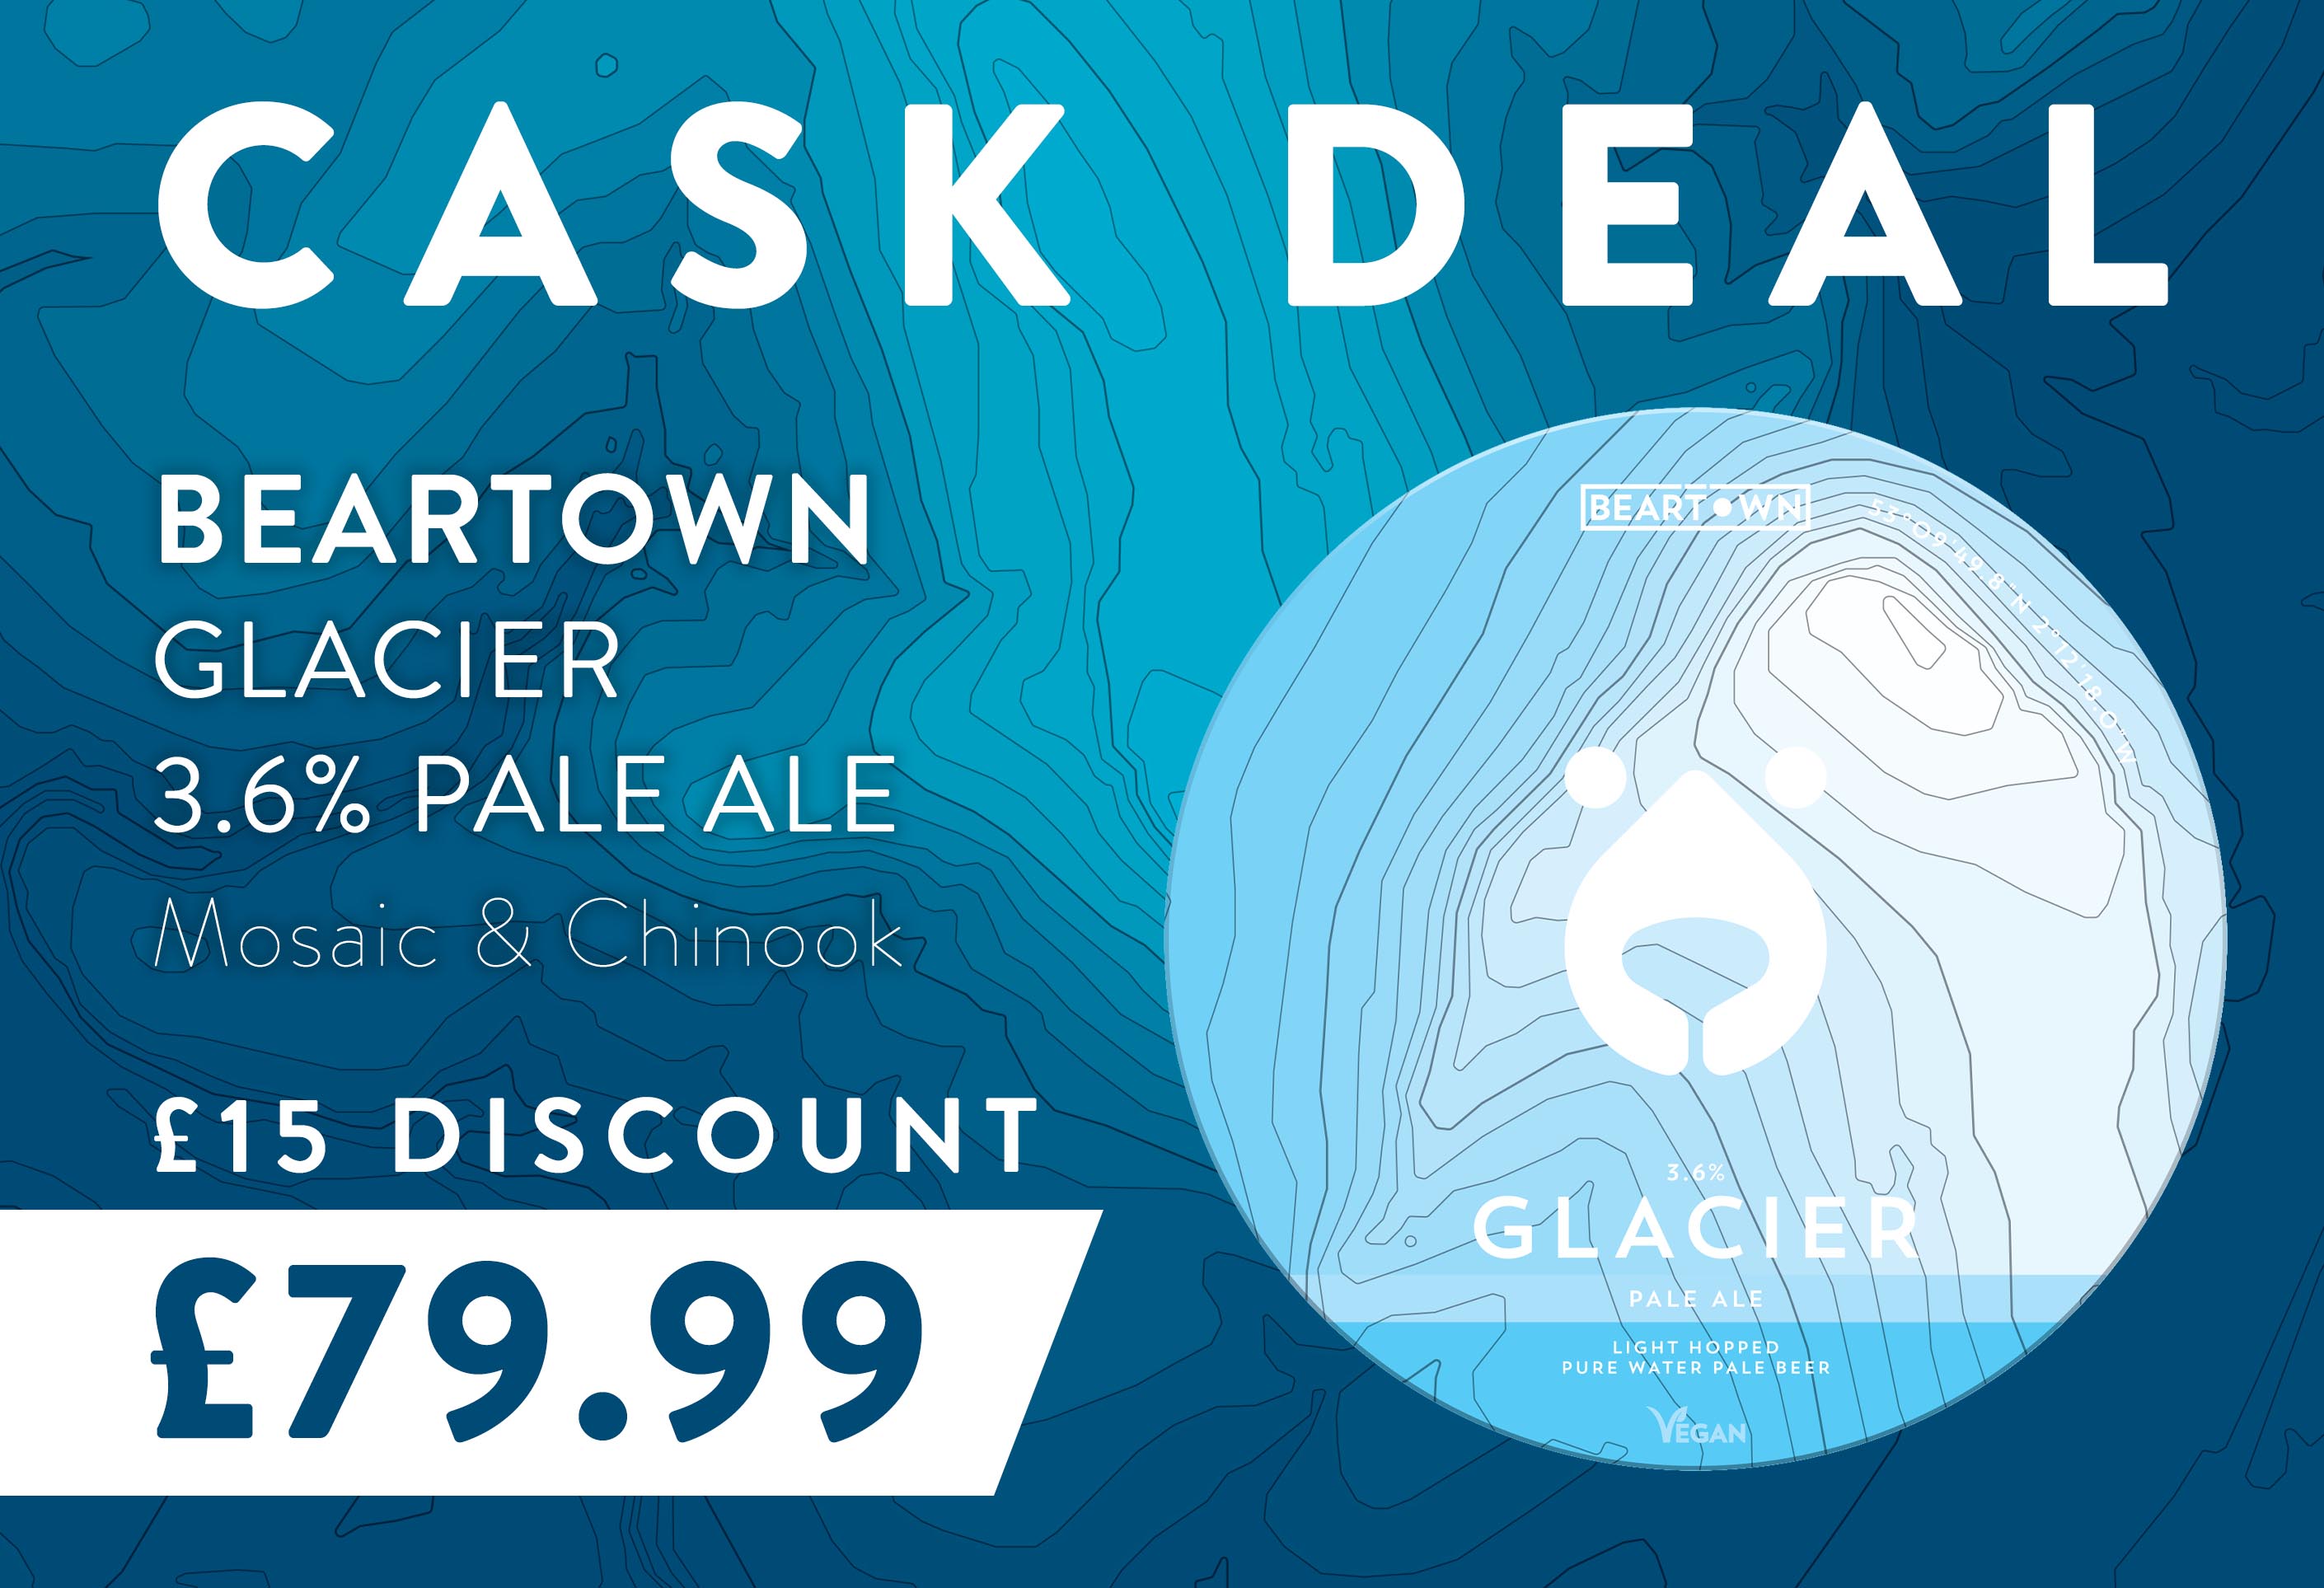 Beartown Glacier cask deal - £79.99